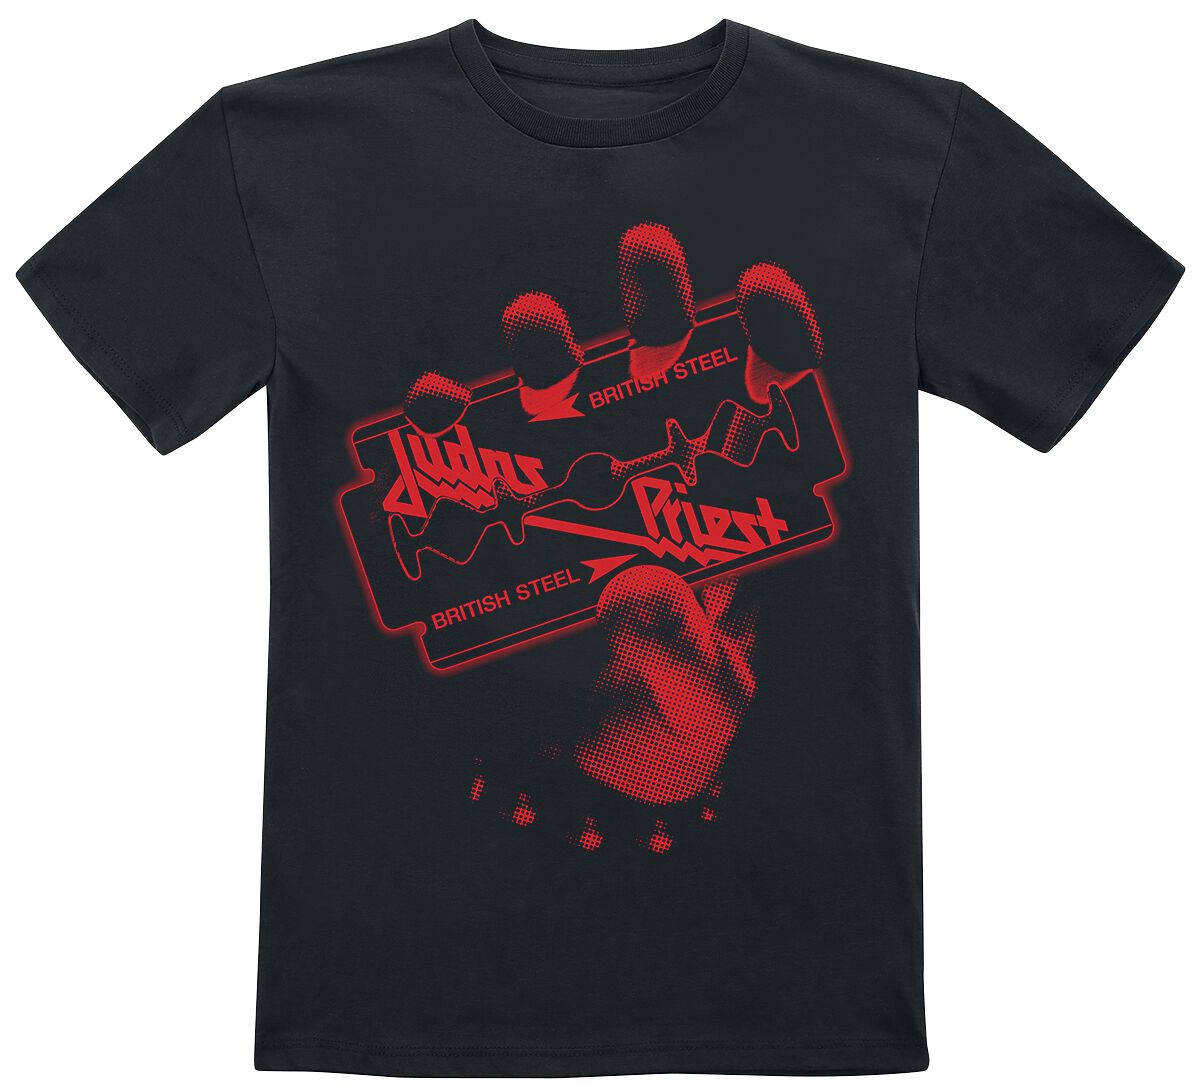 Judas Priest Kids - British Steel Bitmap T-Shirt black